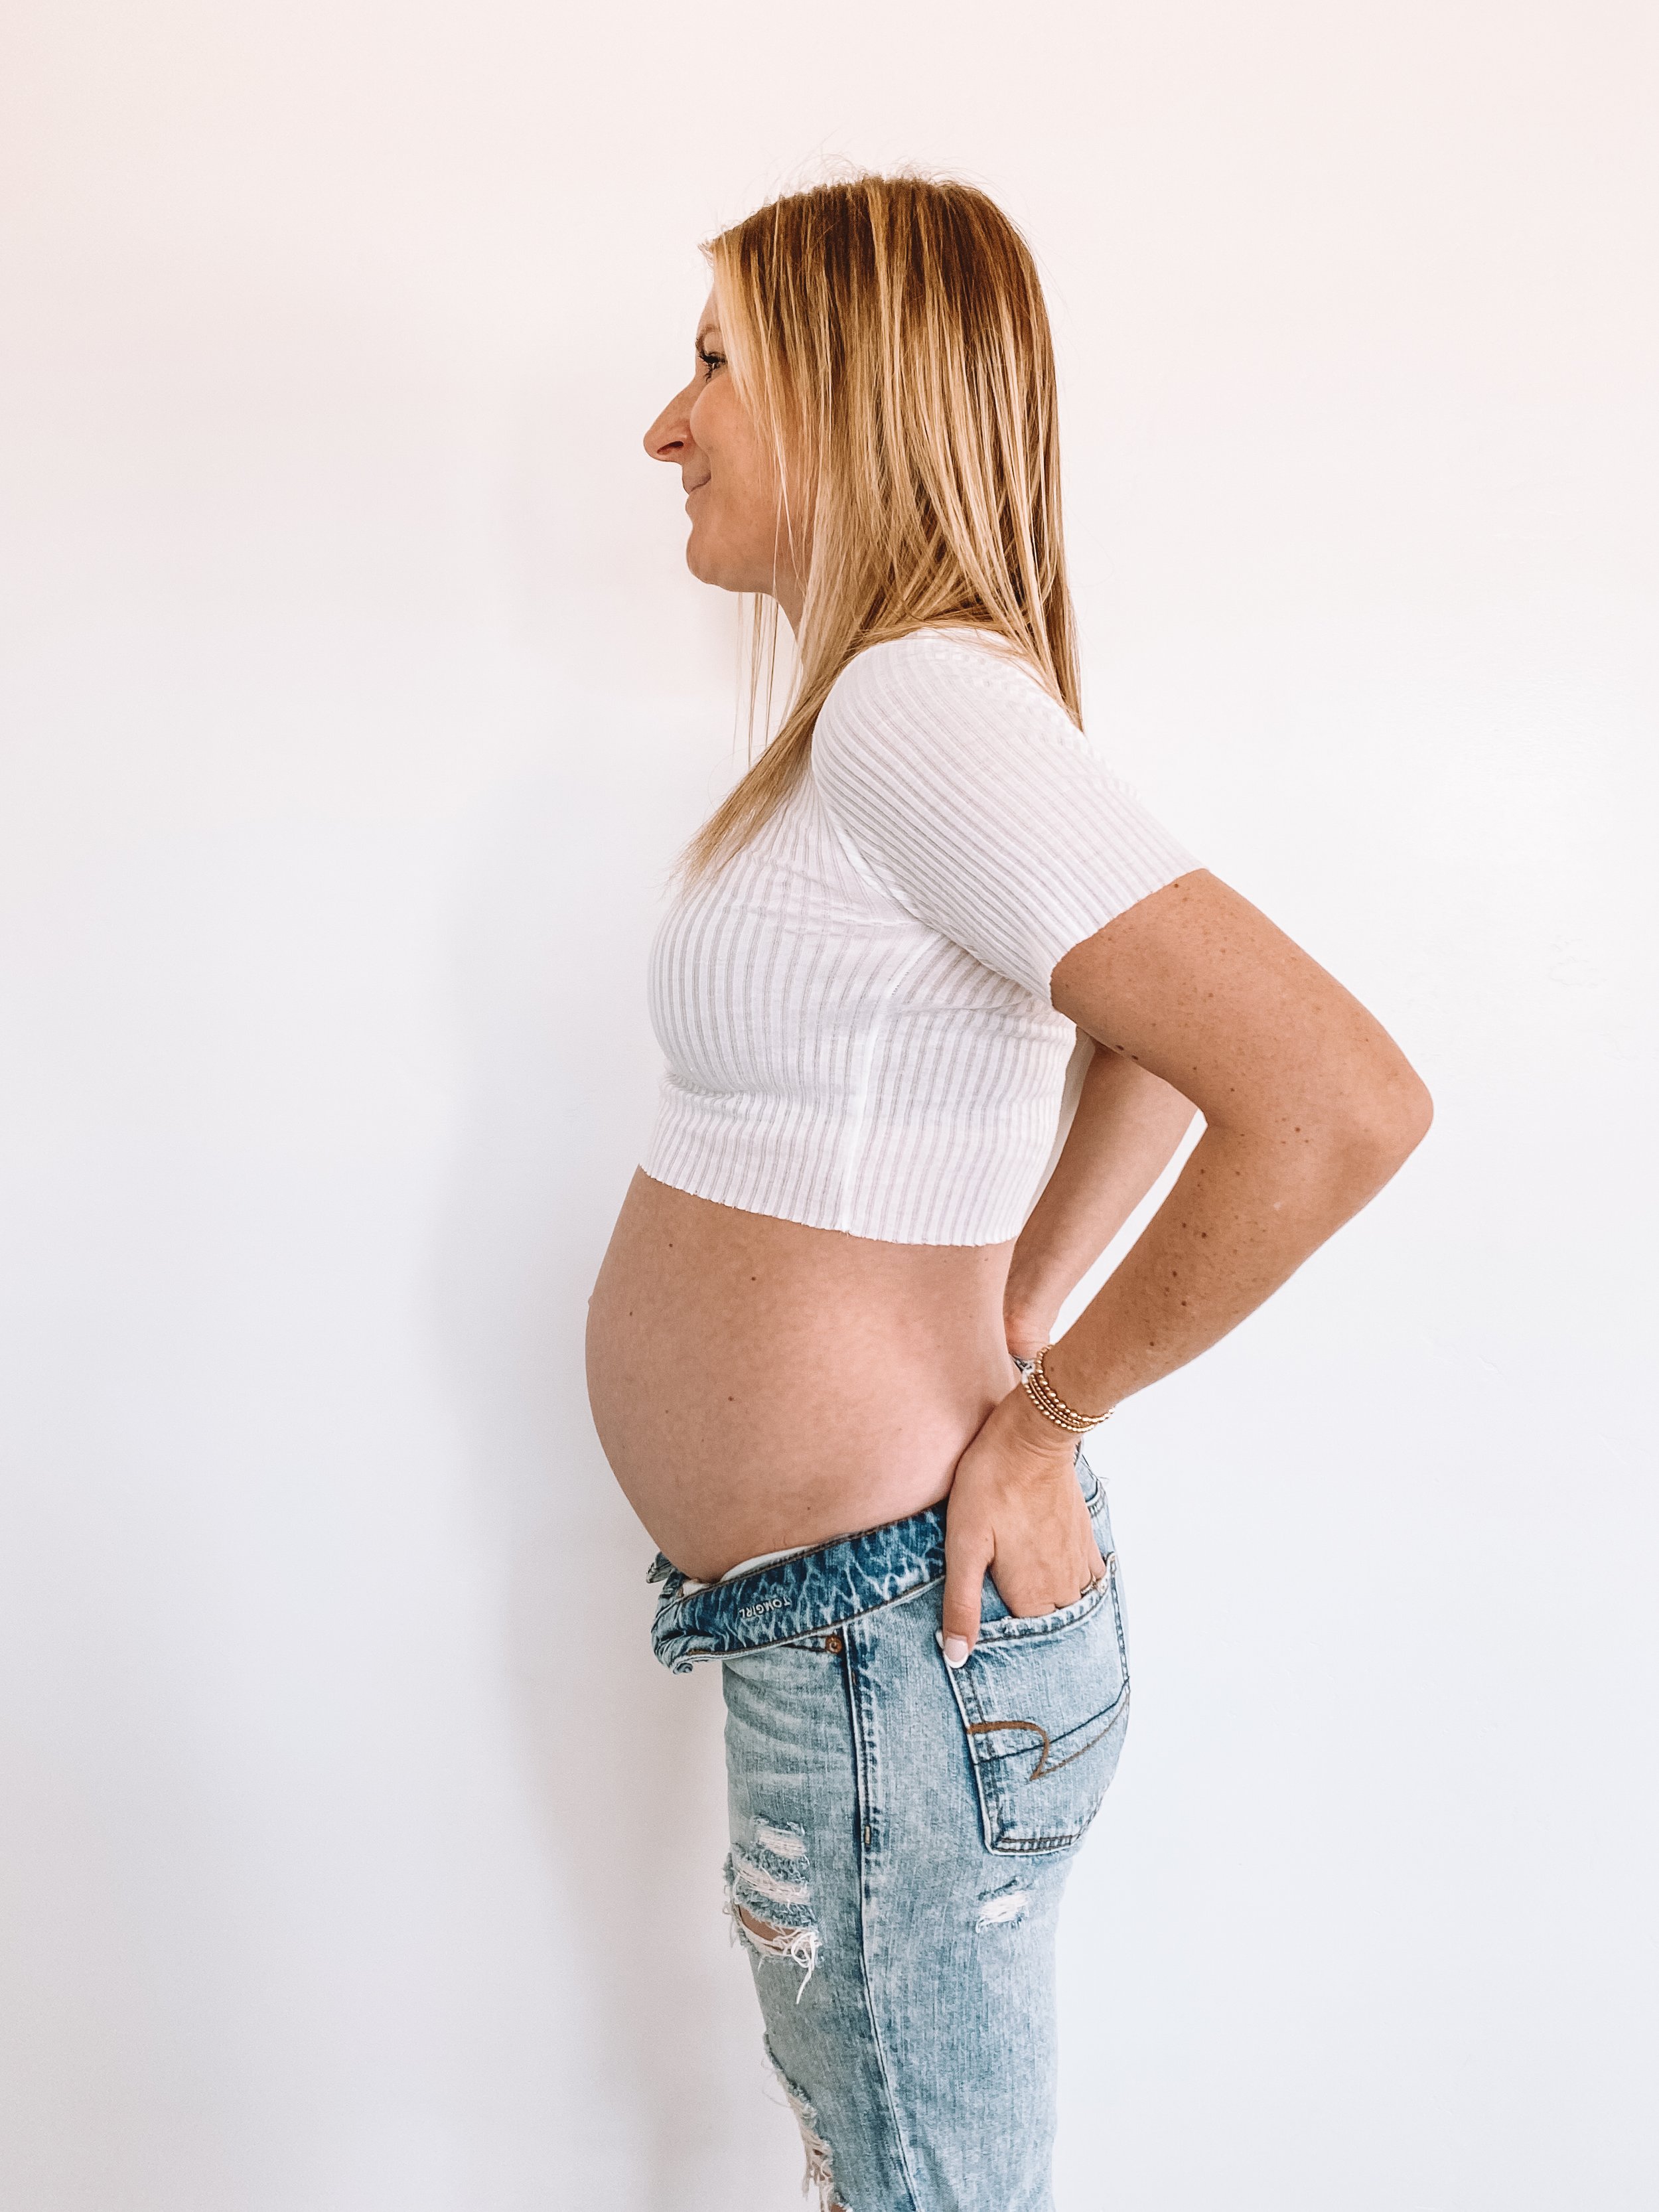 21 Weeks Pregnant with Macallen